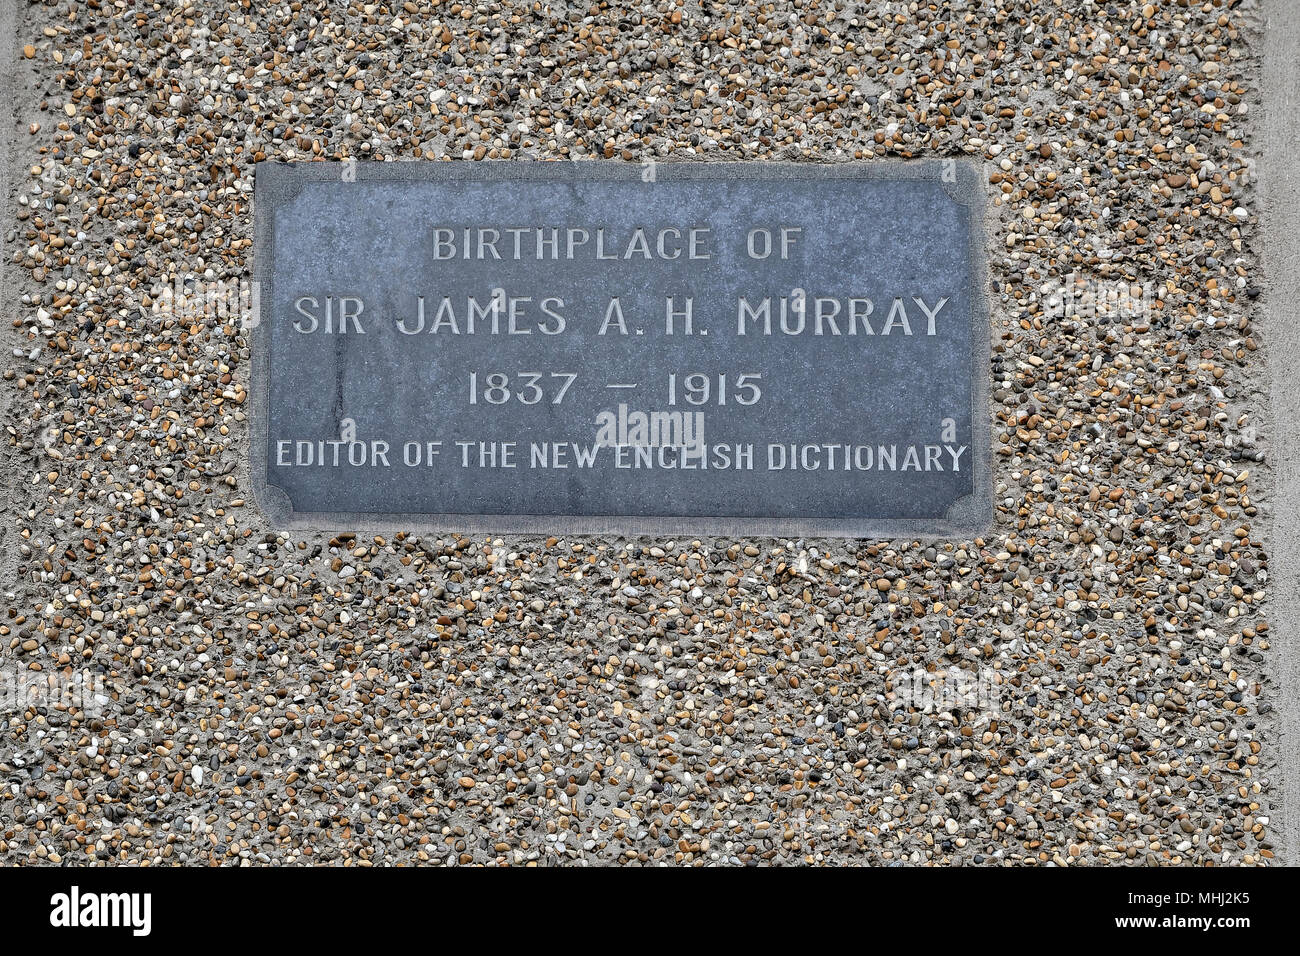 Sir James Augustus Henry Murray lexicographer 1837 - 1915, birthplace, Denholm Scottish Borders. Stock Photo